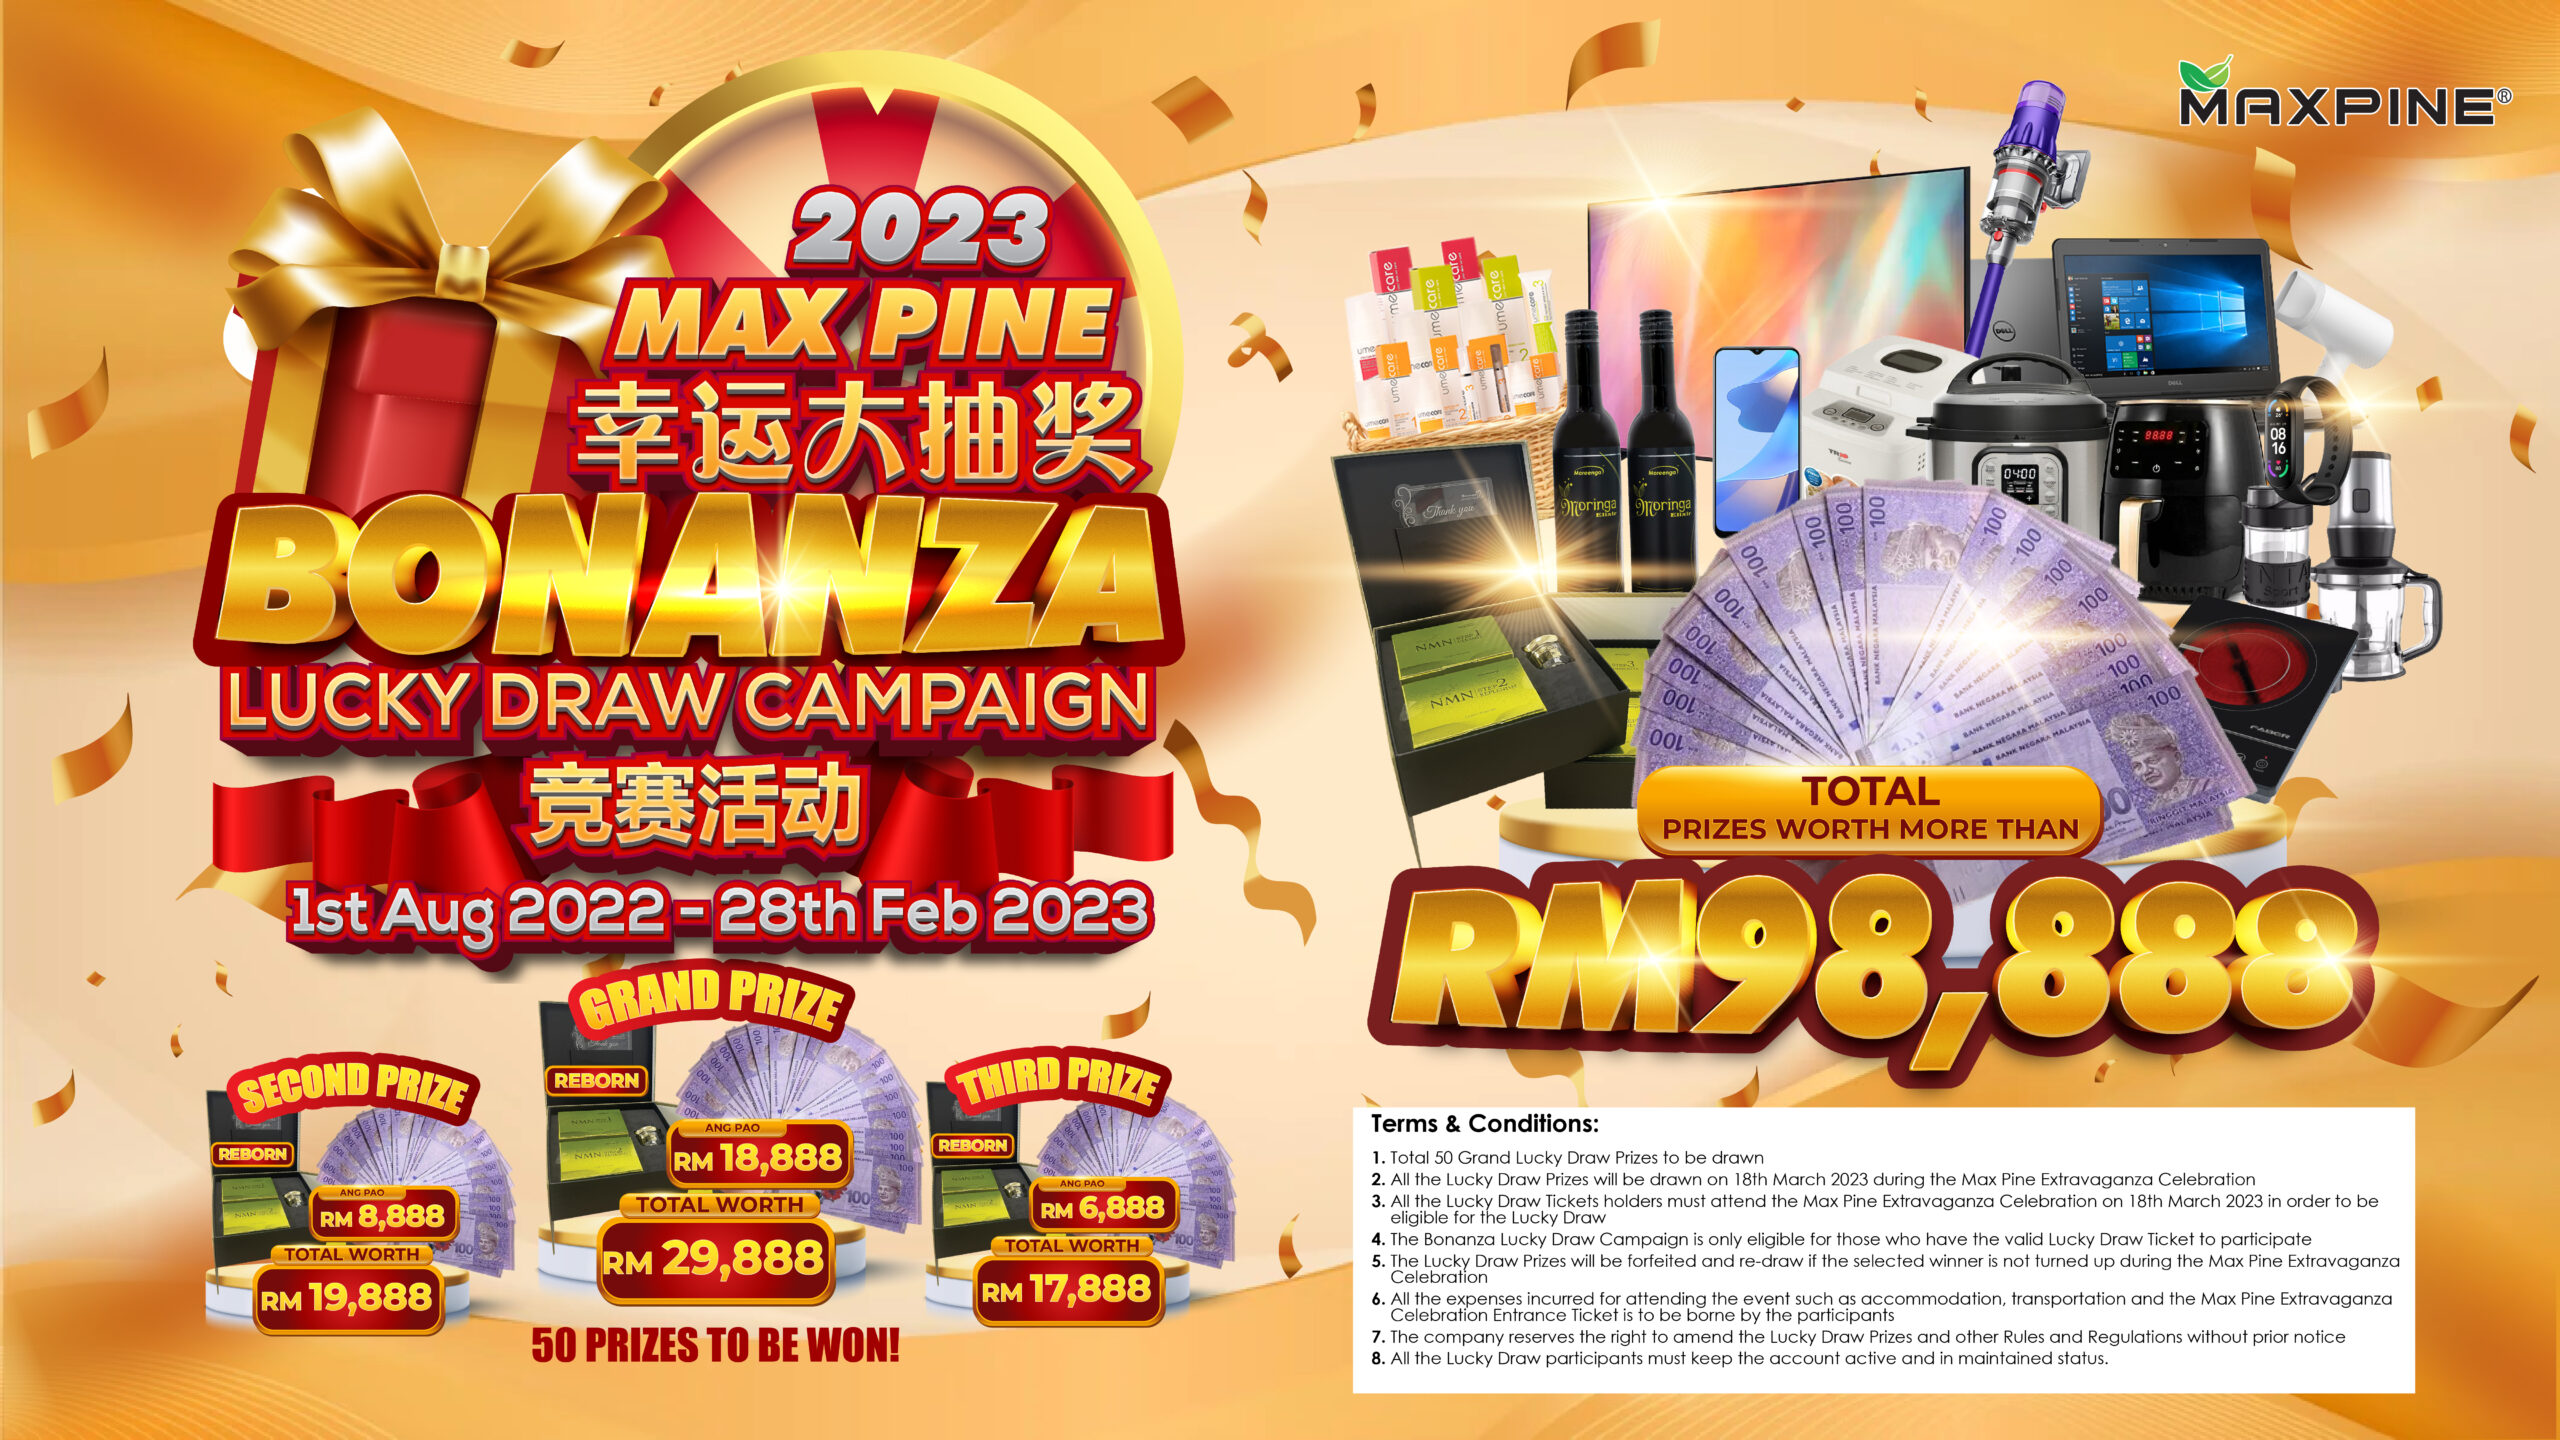 Bonanza Lucky Draw Campaign Max Pine International